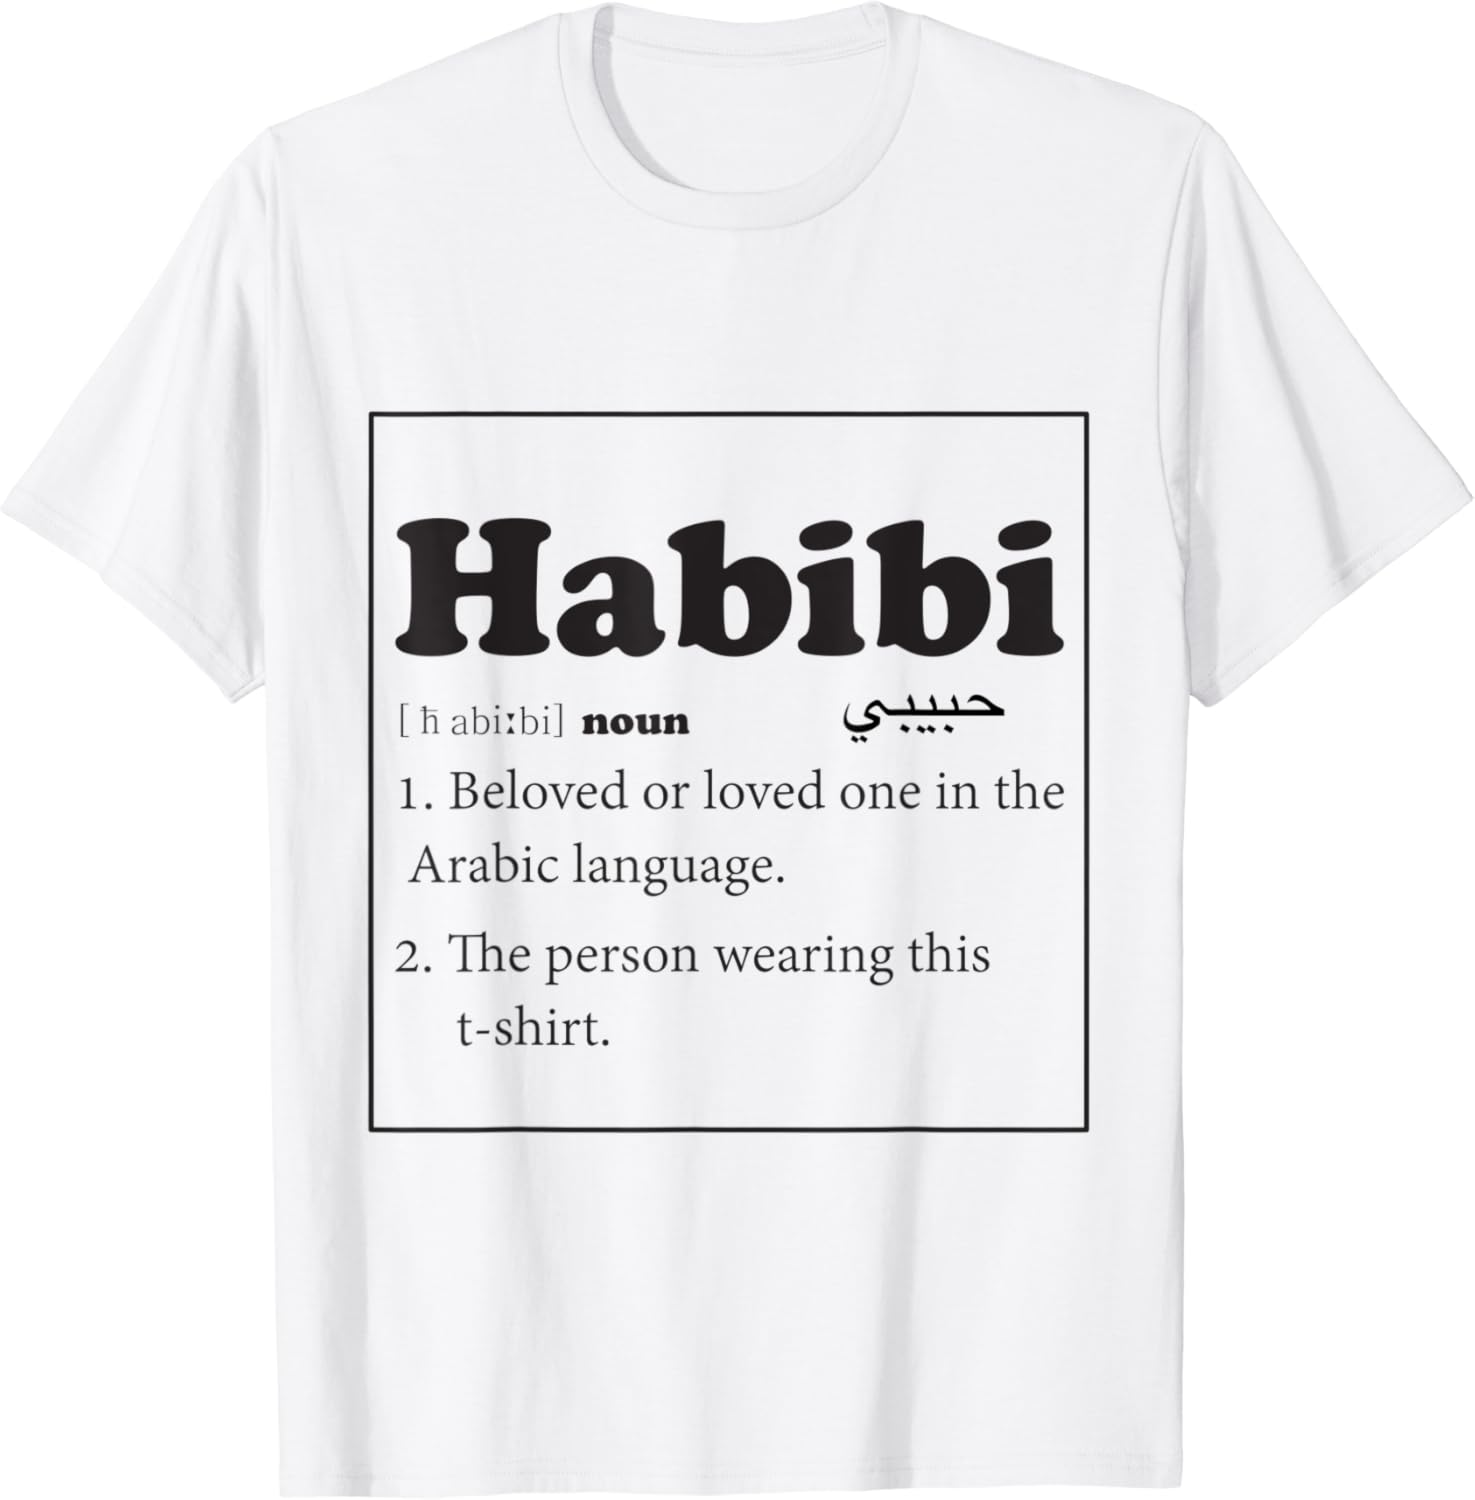 habibi definition